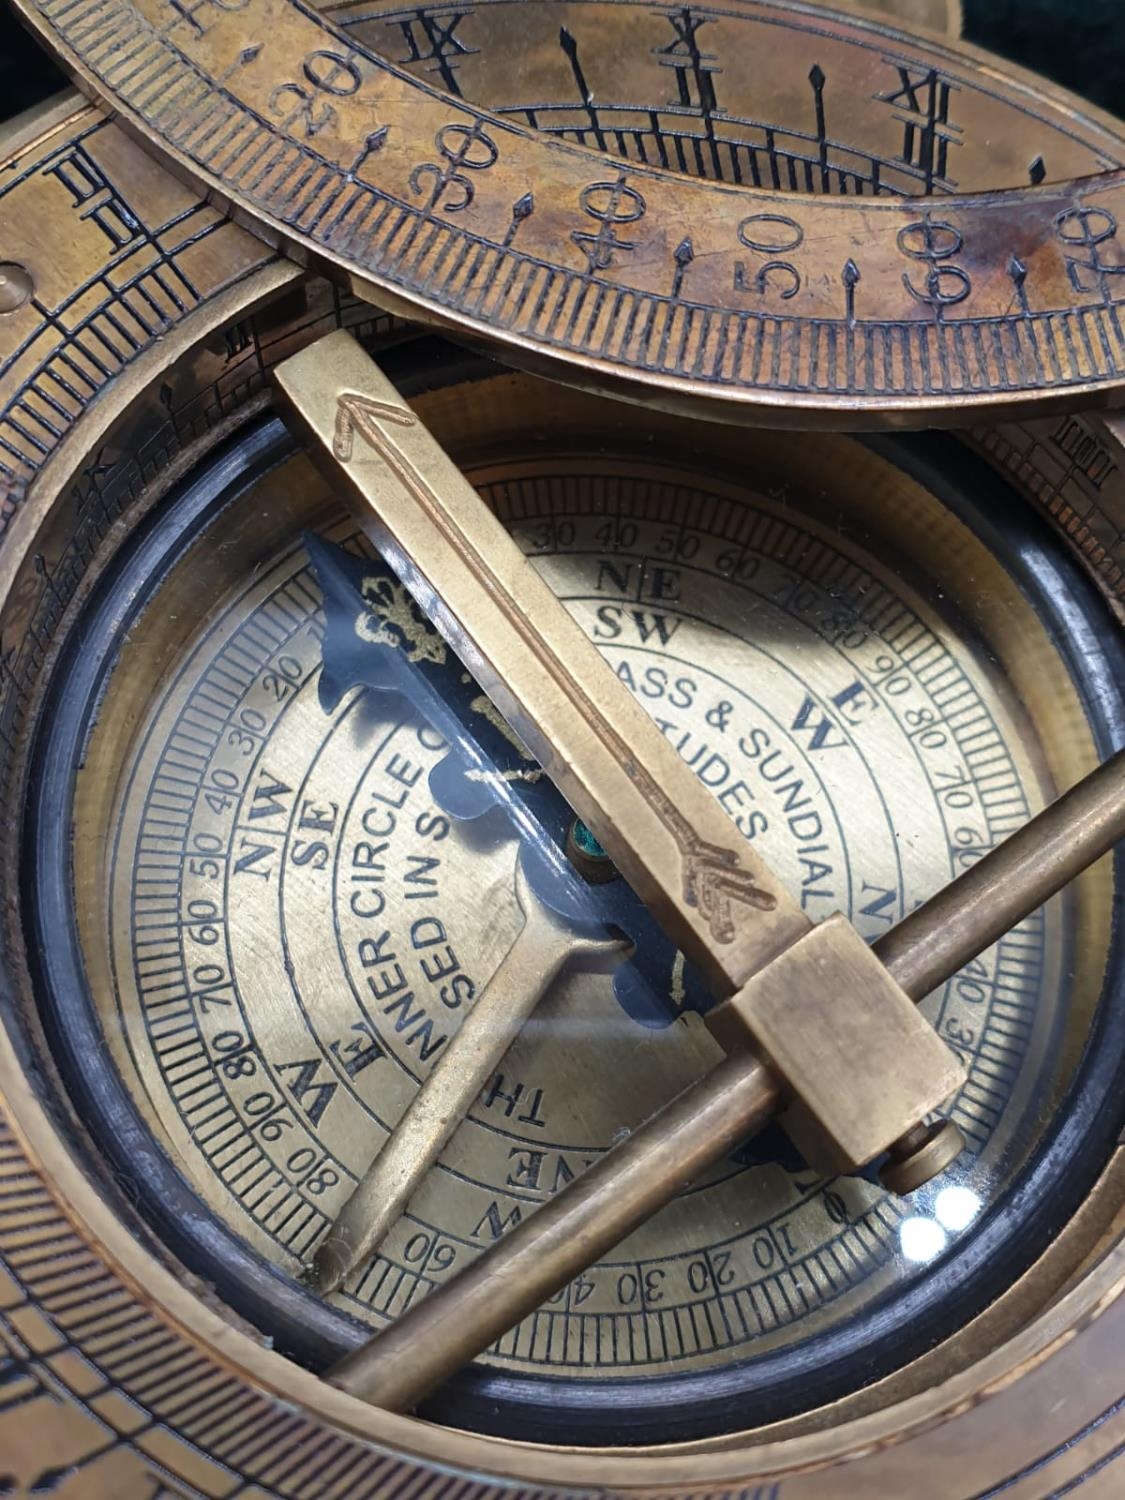 J.H.Steward of Strand London brass compass and sundial circa 1950 in custom made box (12x12cm) - Image 7 of 9